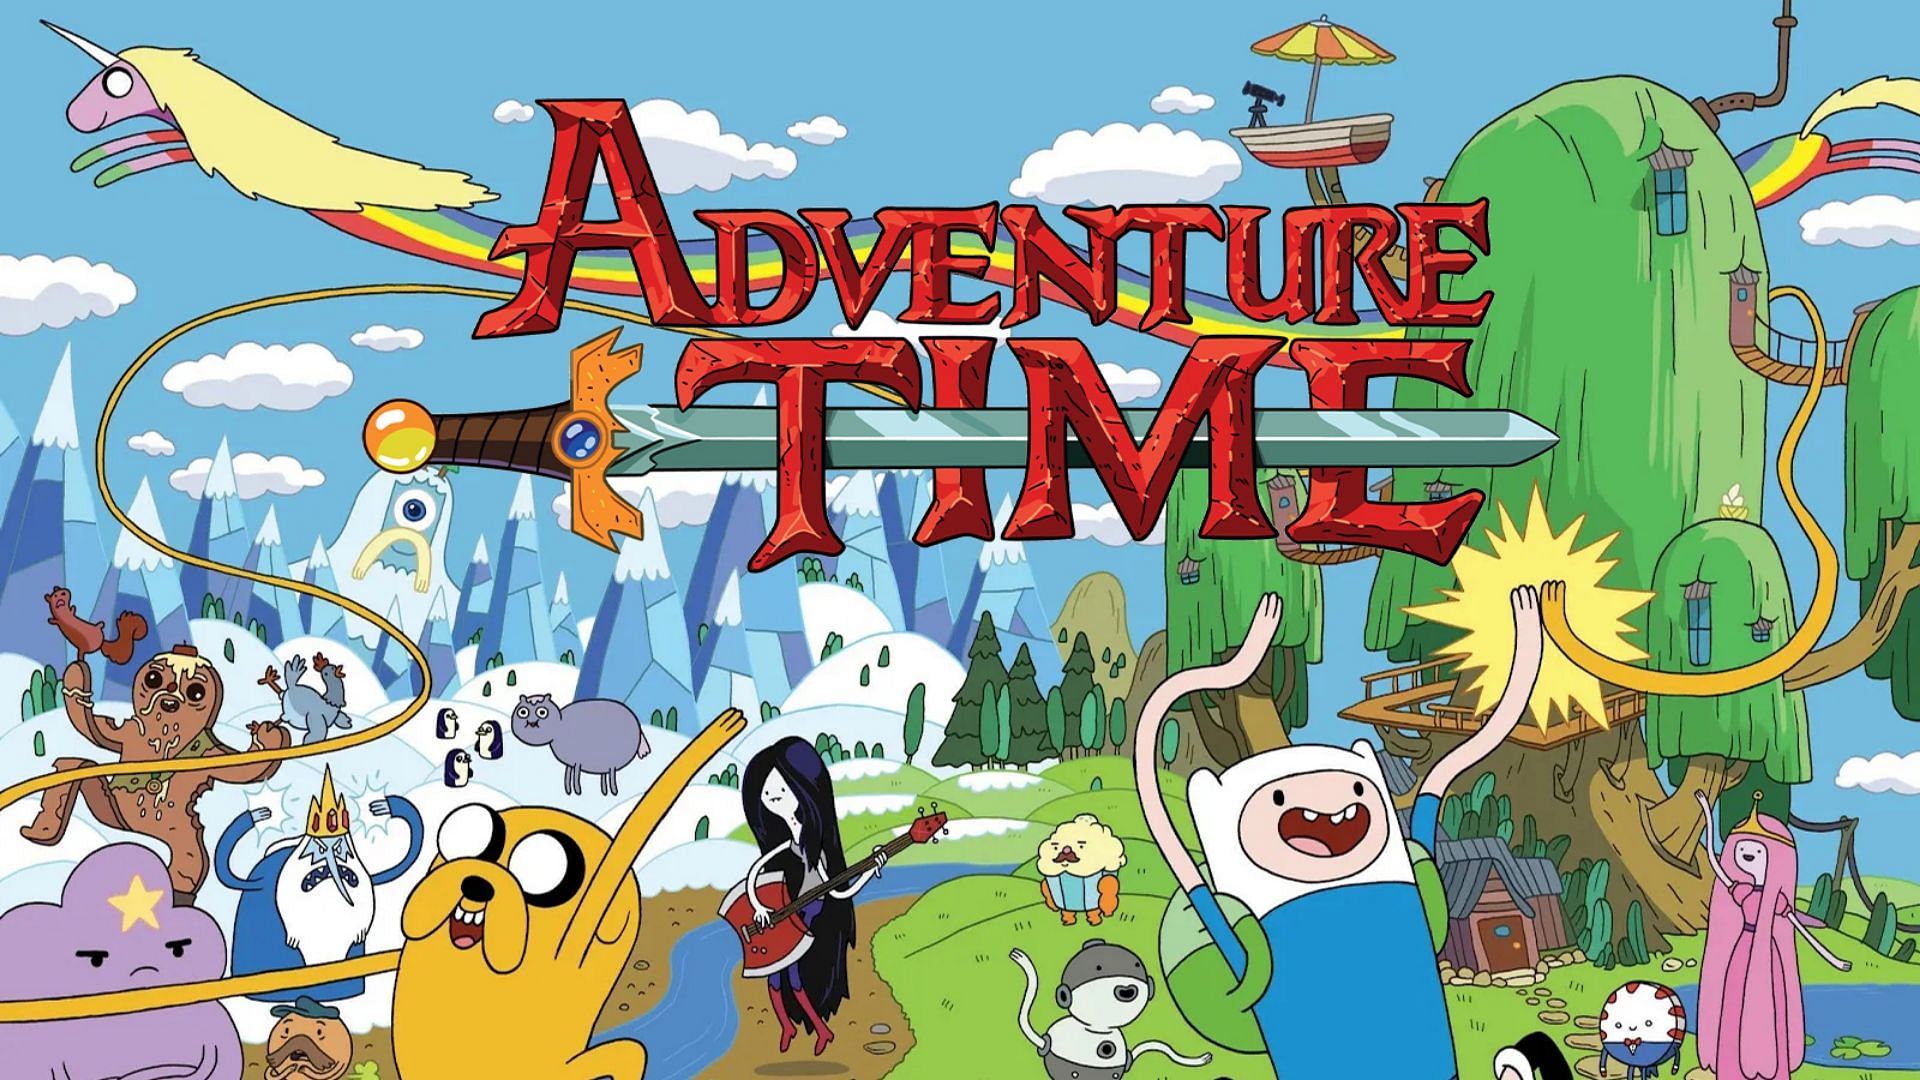 Adventure Time (Image via Prime Video)